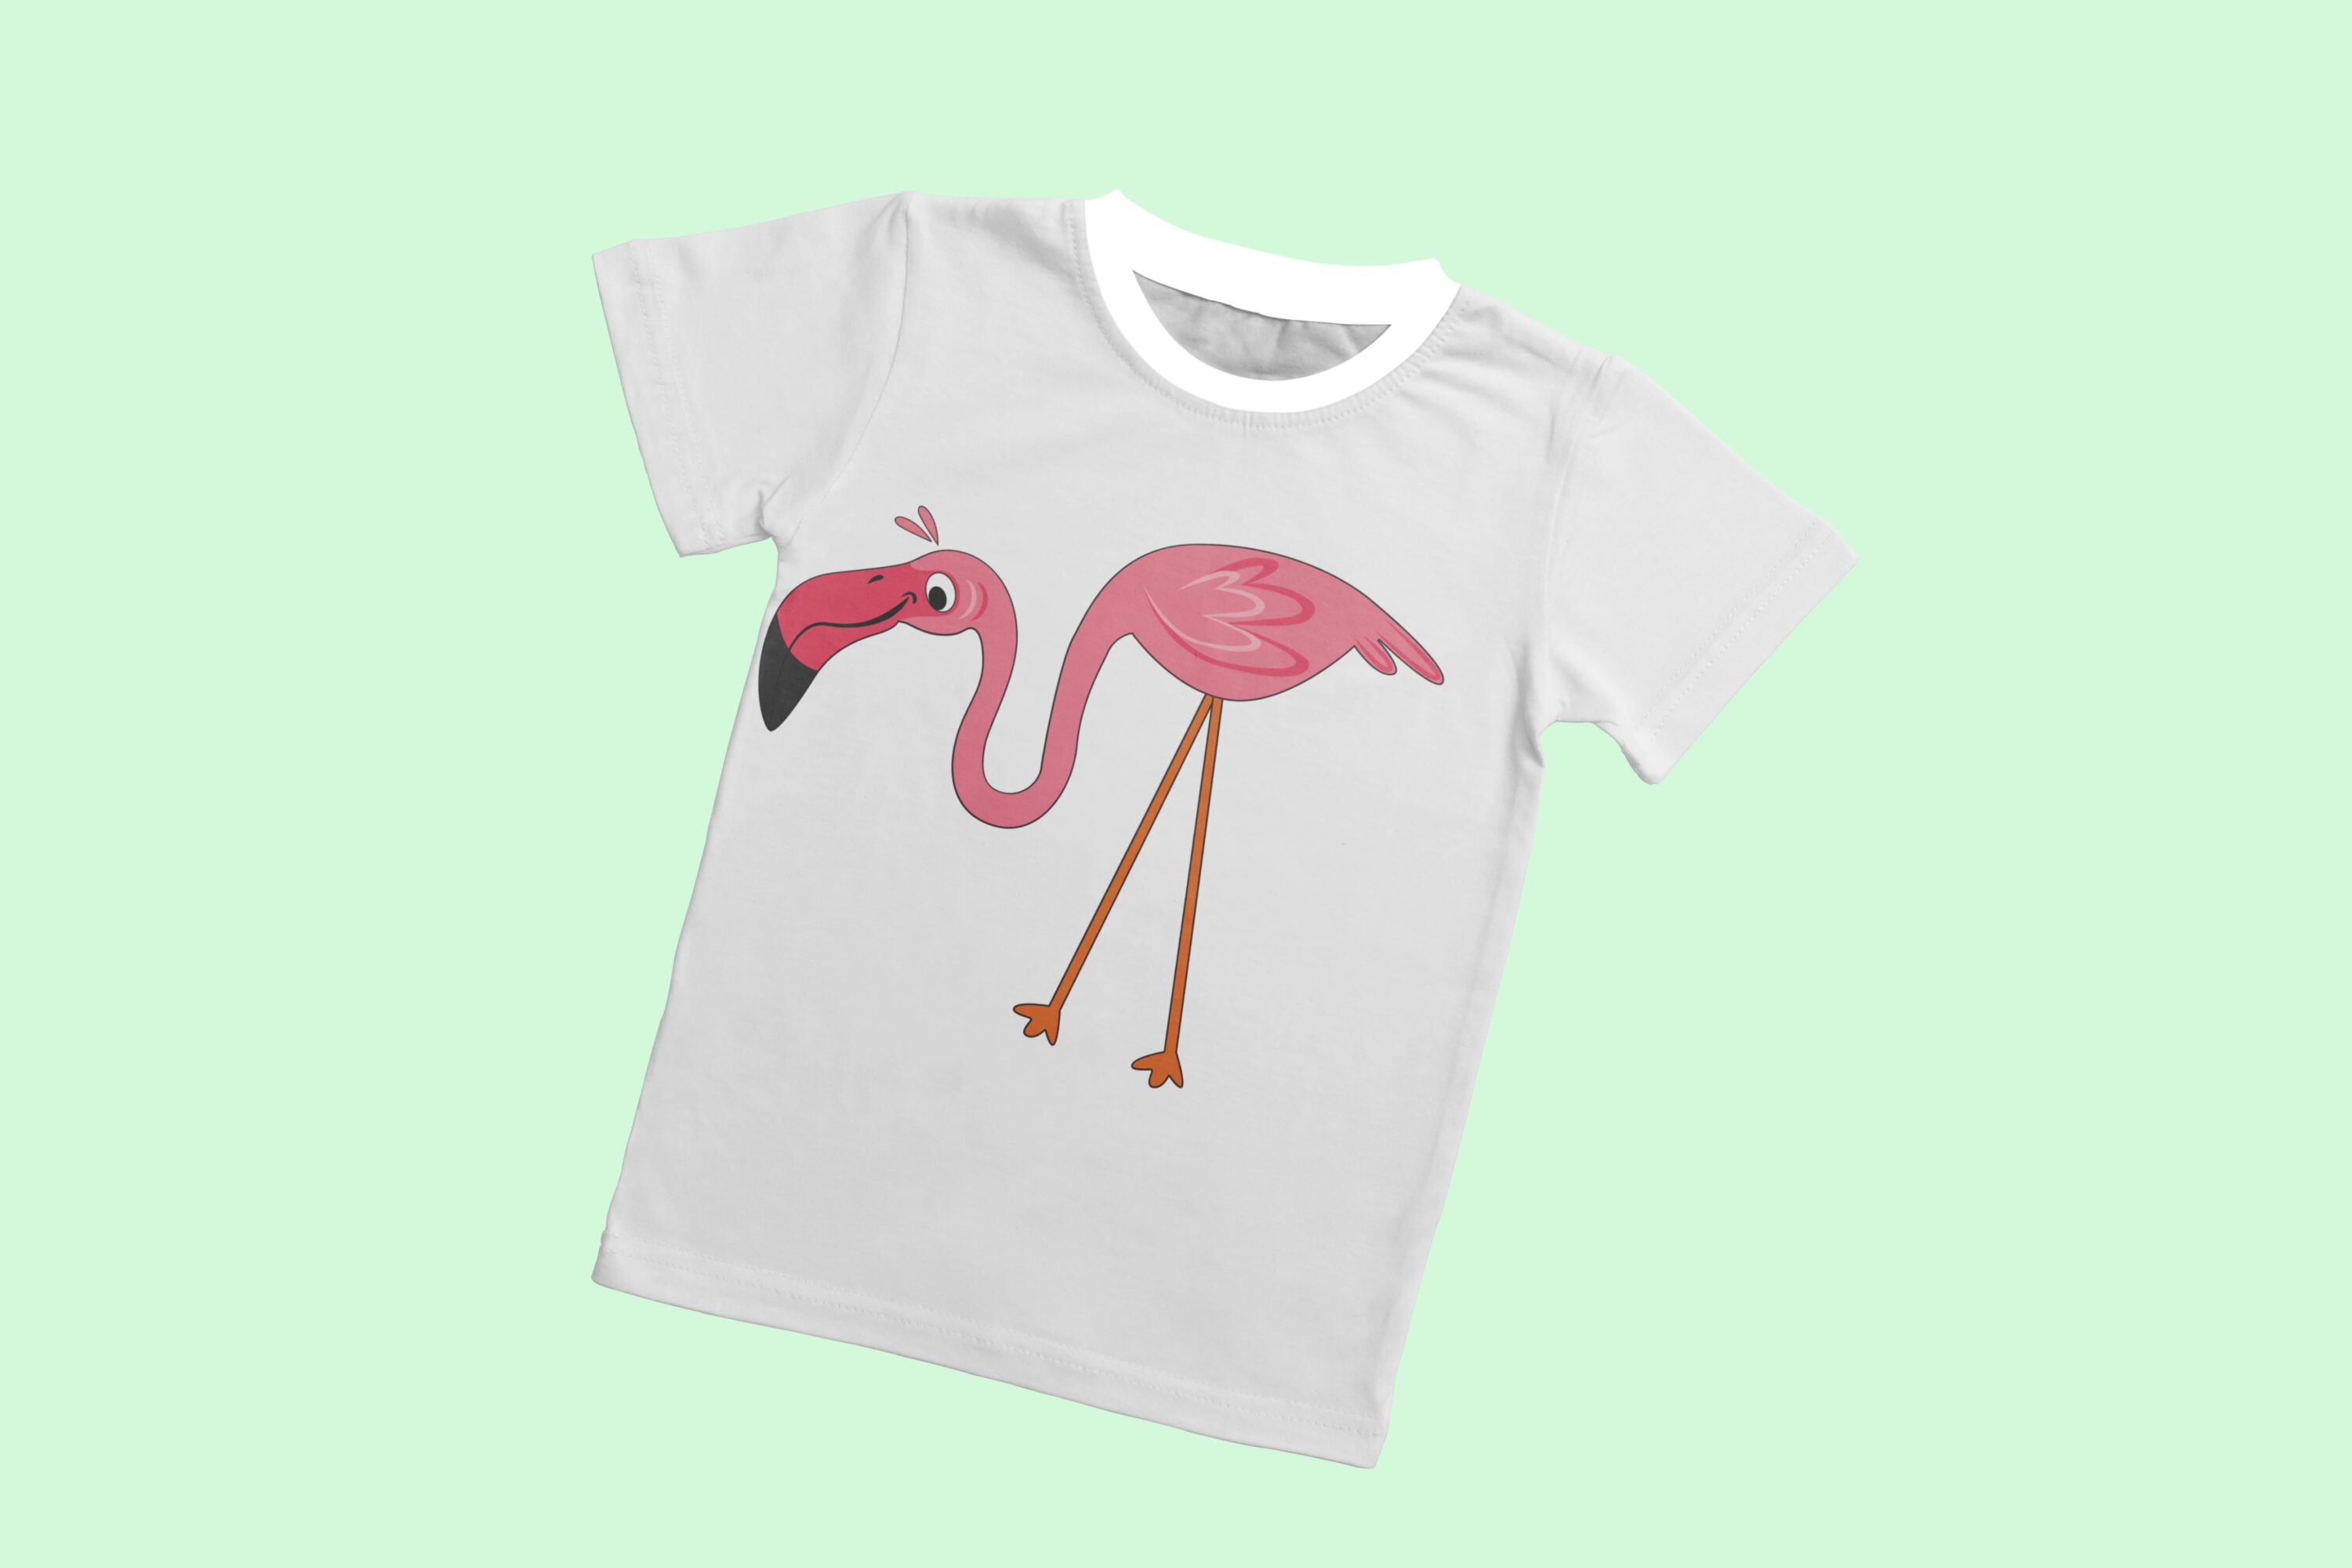 Cute flamingo on the whole t-shirt.